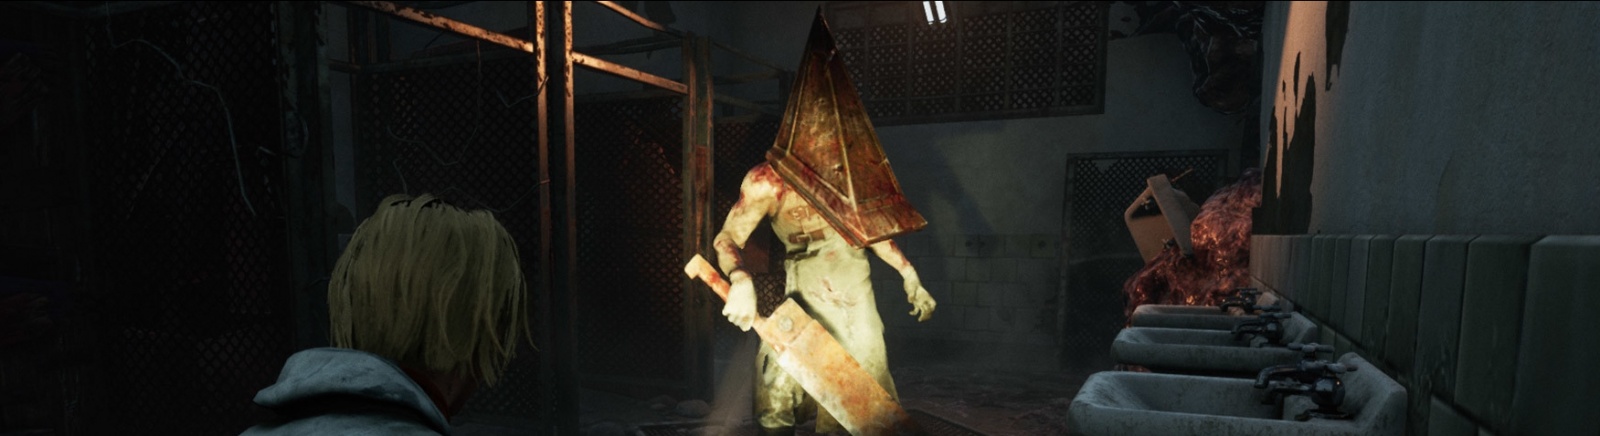 Дата выхода Dead by Daylight - Silent Hill Chapter (Dead by Daylight: Silent Hill Chapter)  на PC, PS4 и Xbox One в России и во всем мире